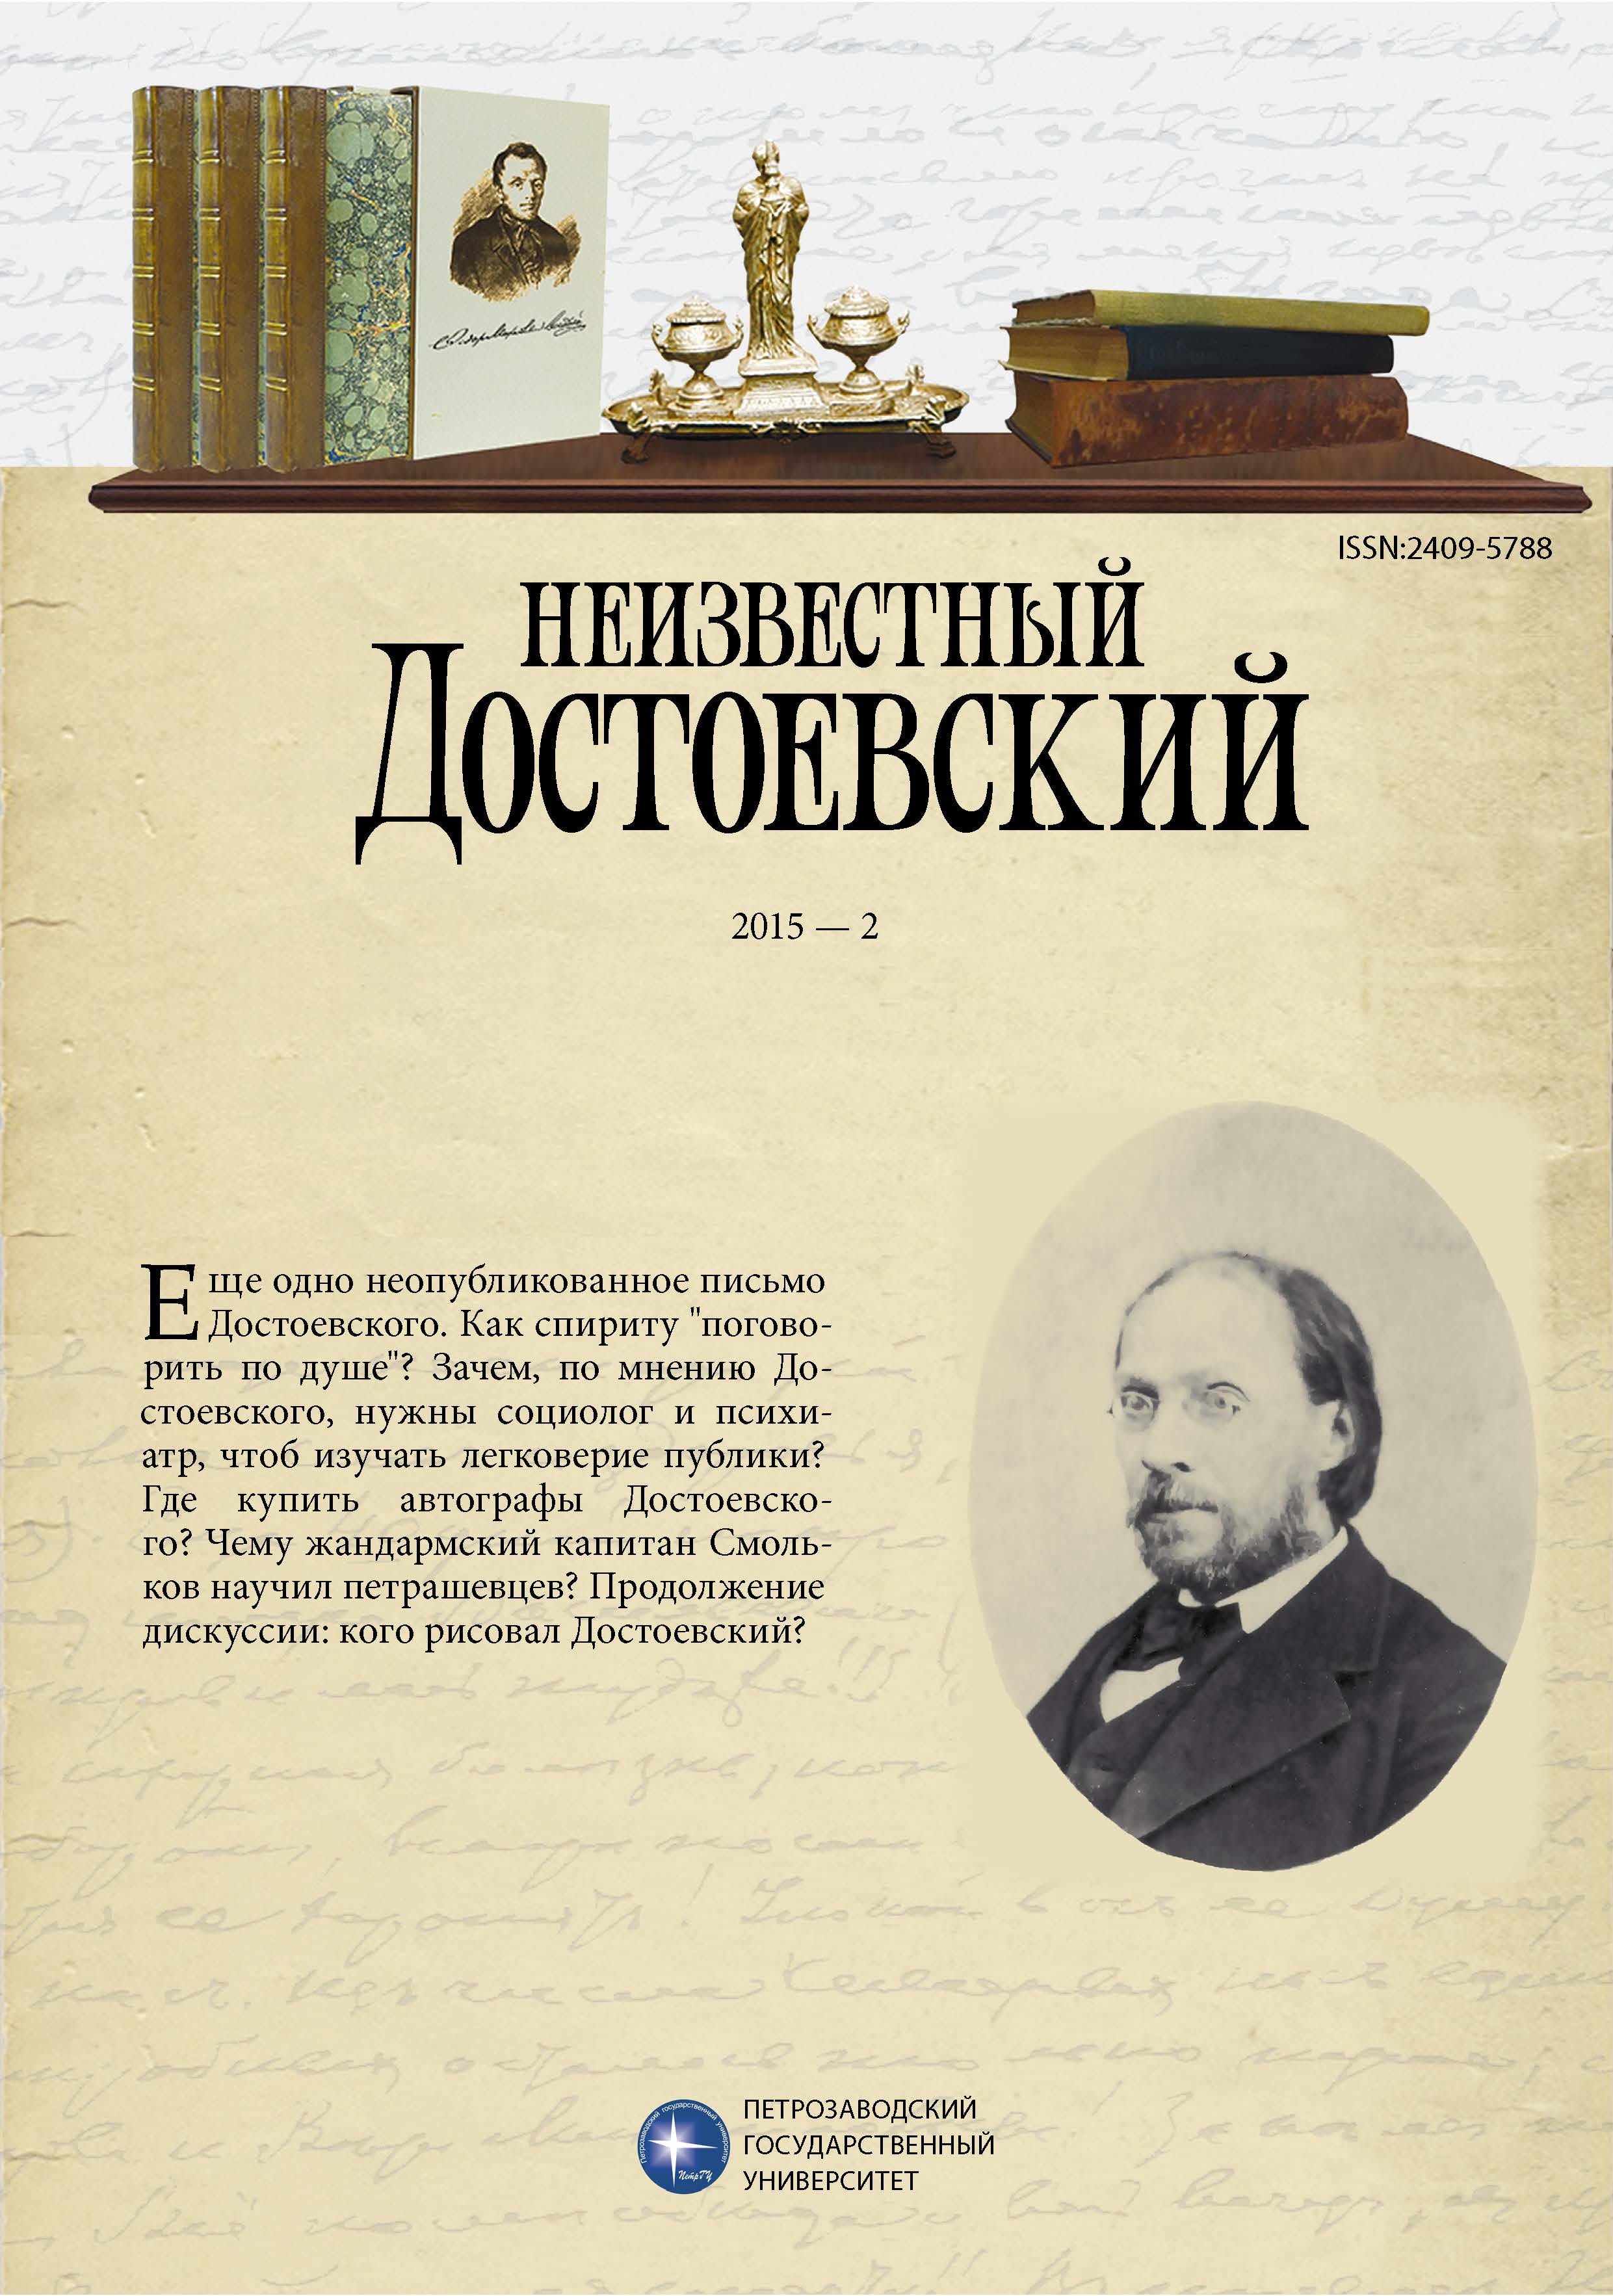 Fyodor Dostoevsky, Nicolai Wagner, Anna Dostoevskaya: Correspondence Cover Image